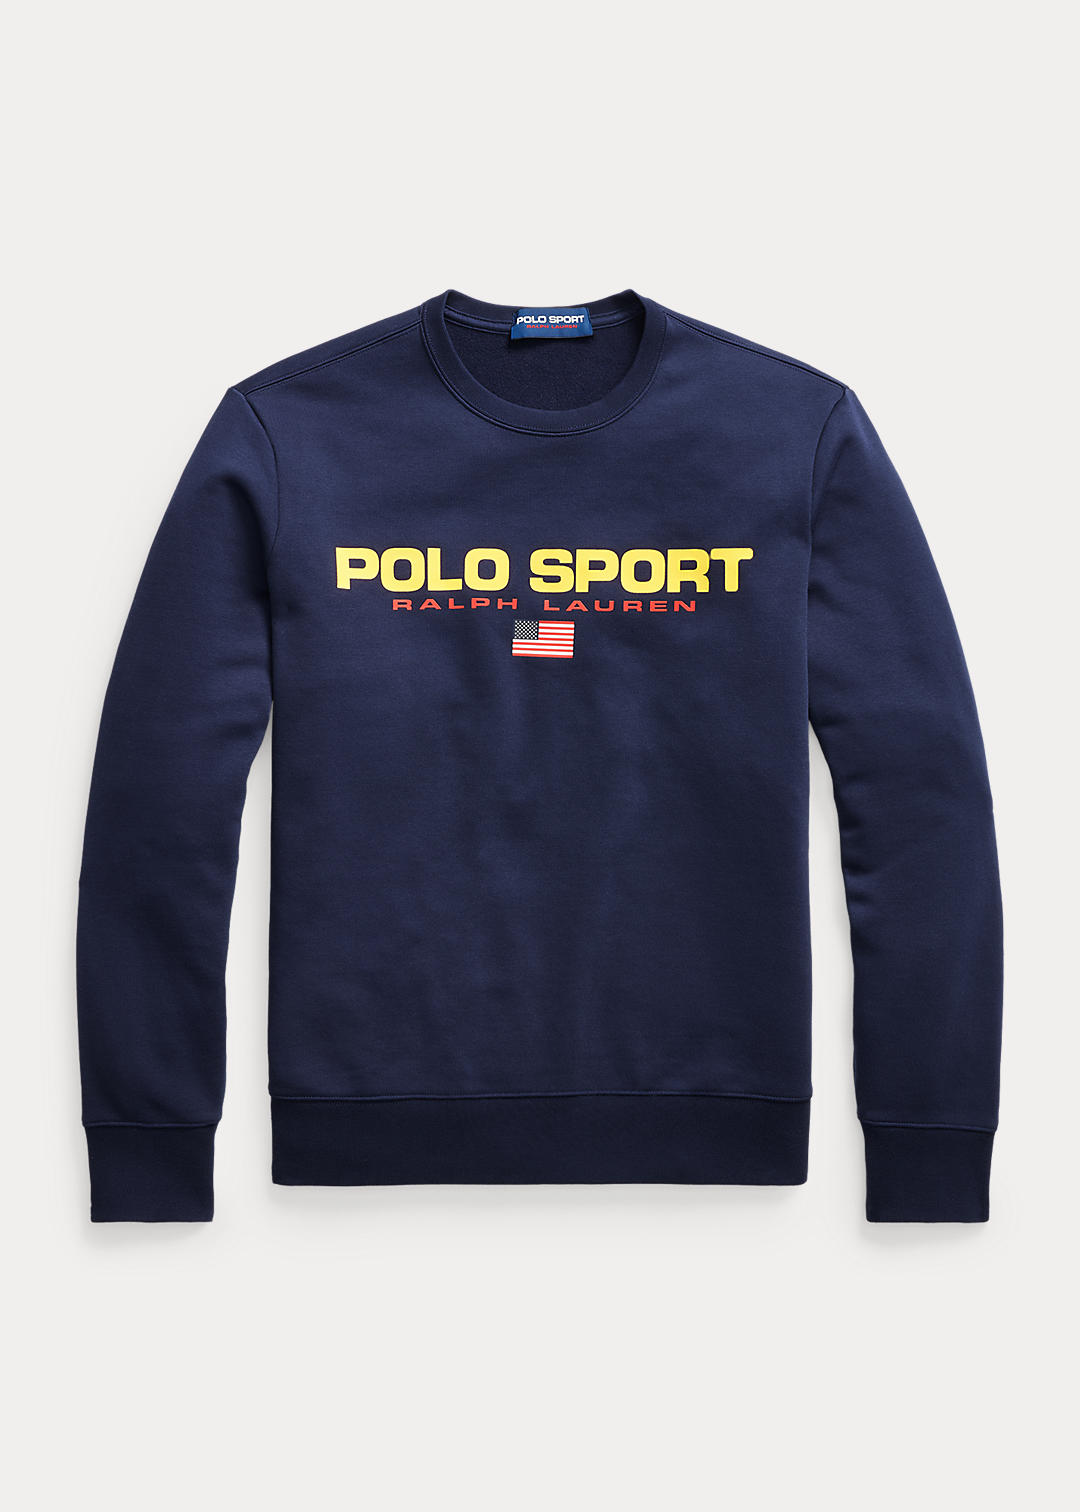 Polo Ralph Lauren Polo Sport fleece sweatshirt 2